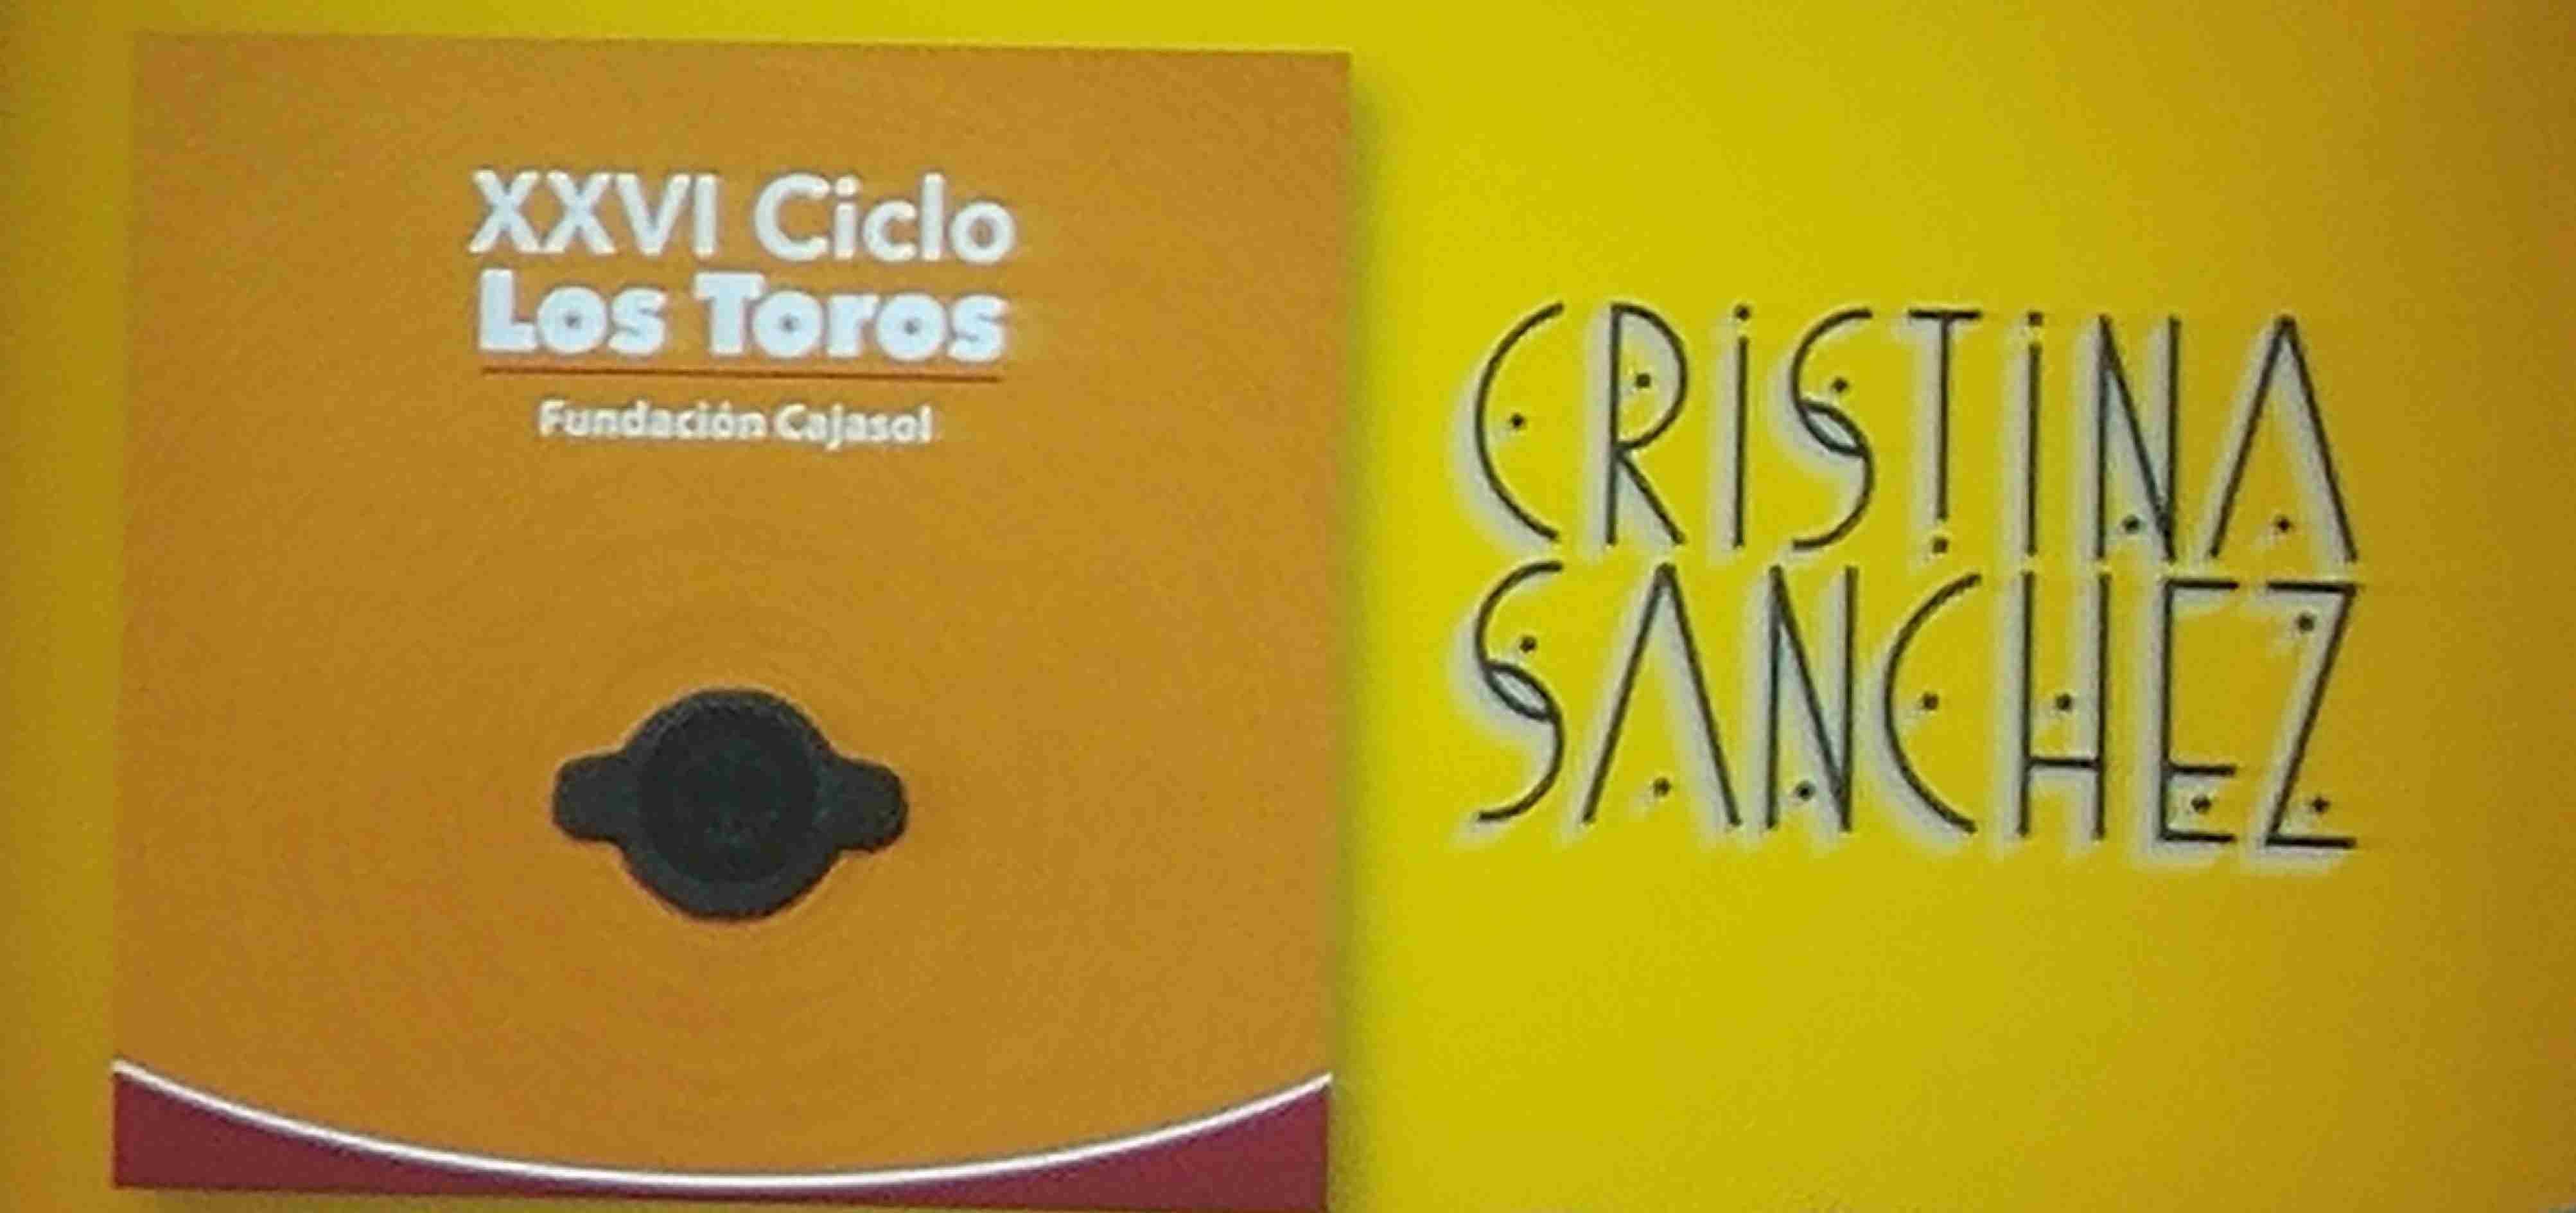 El Paseillo 13-03-2017 Cristina Sánchez 